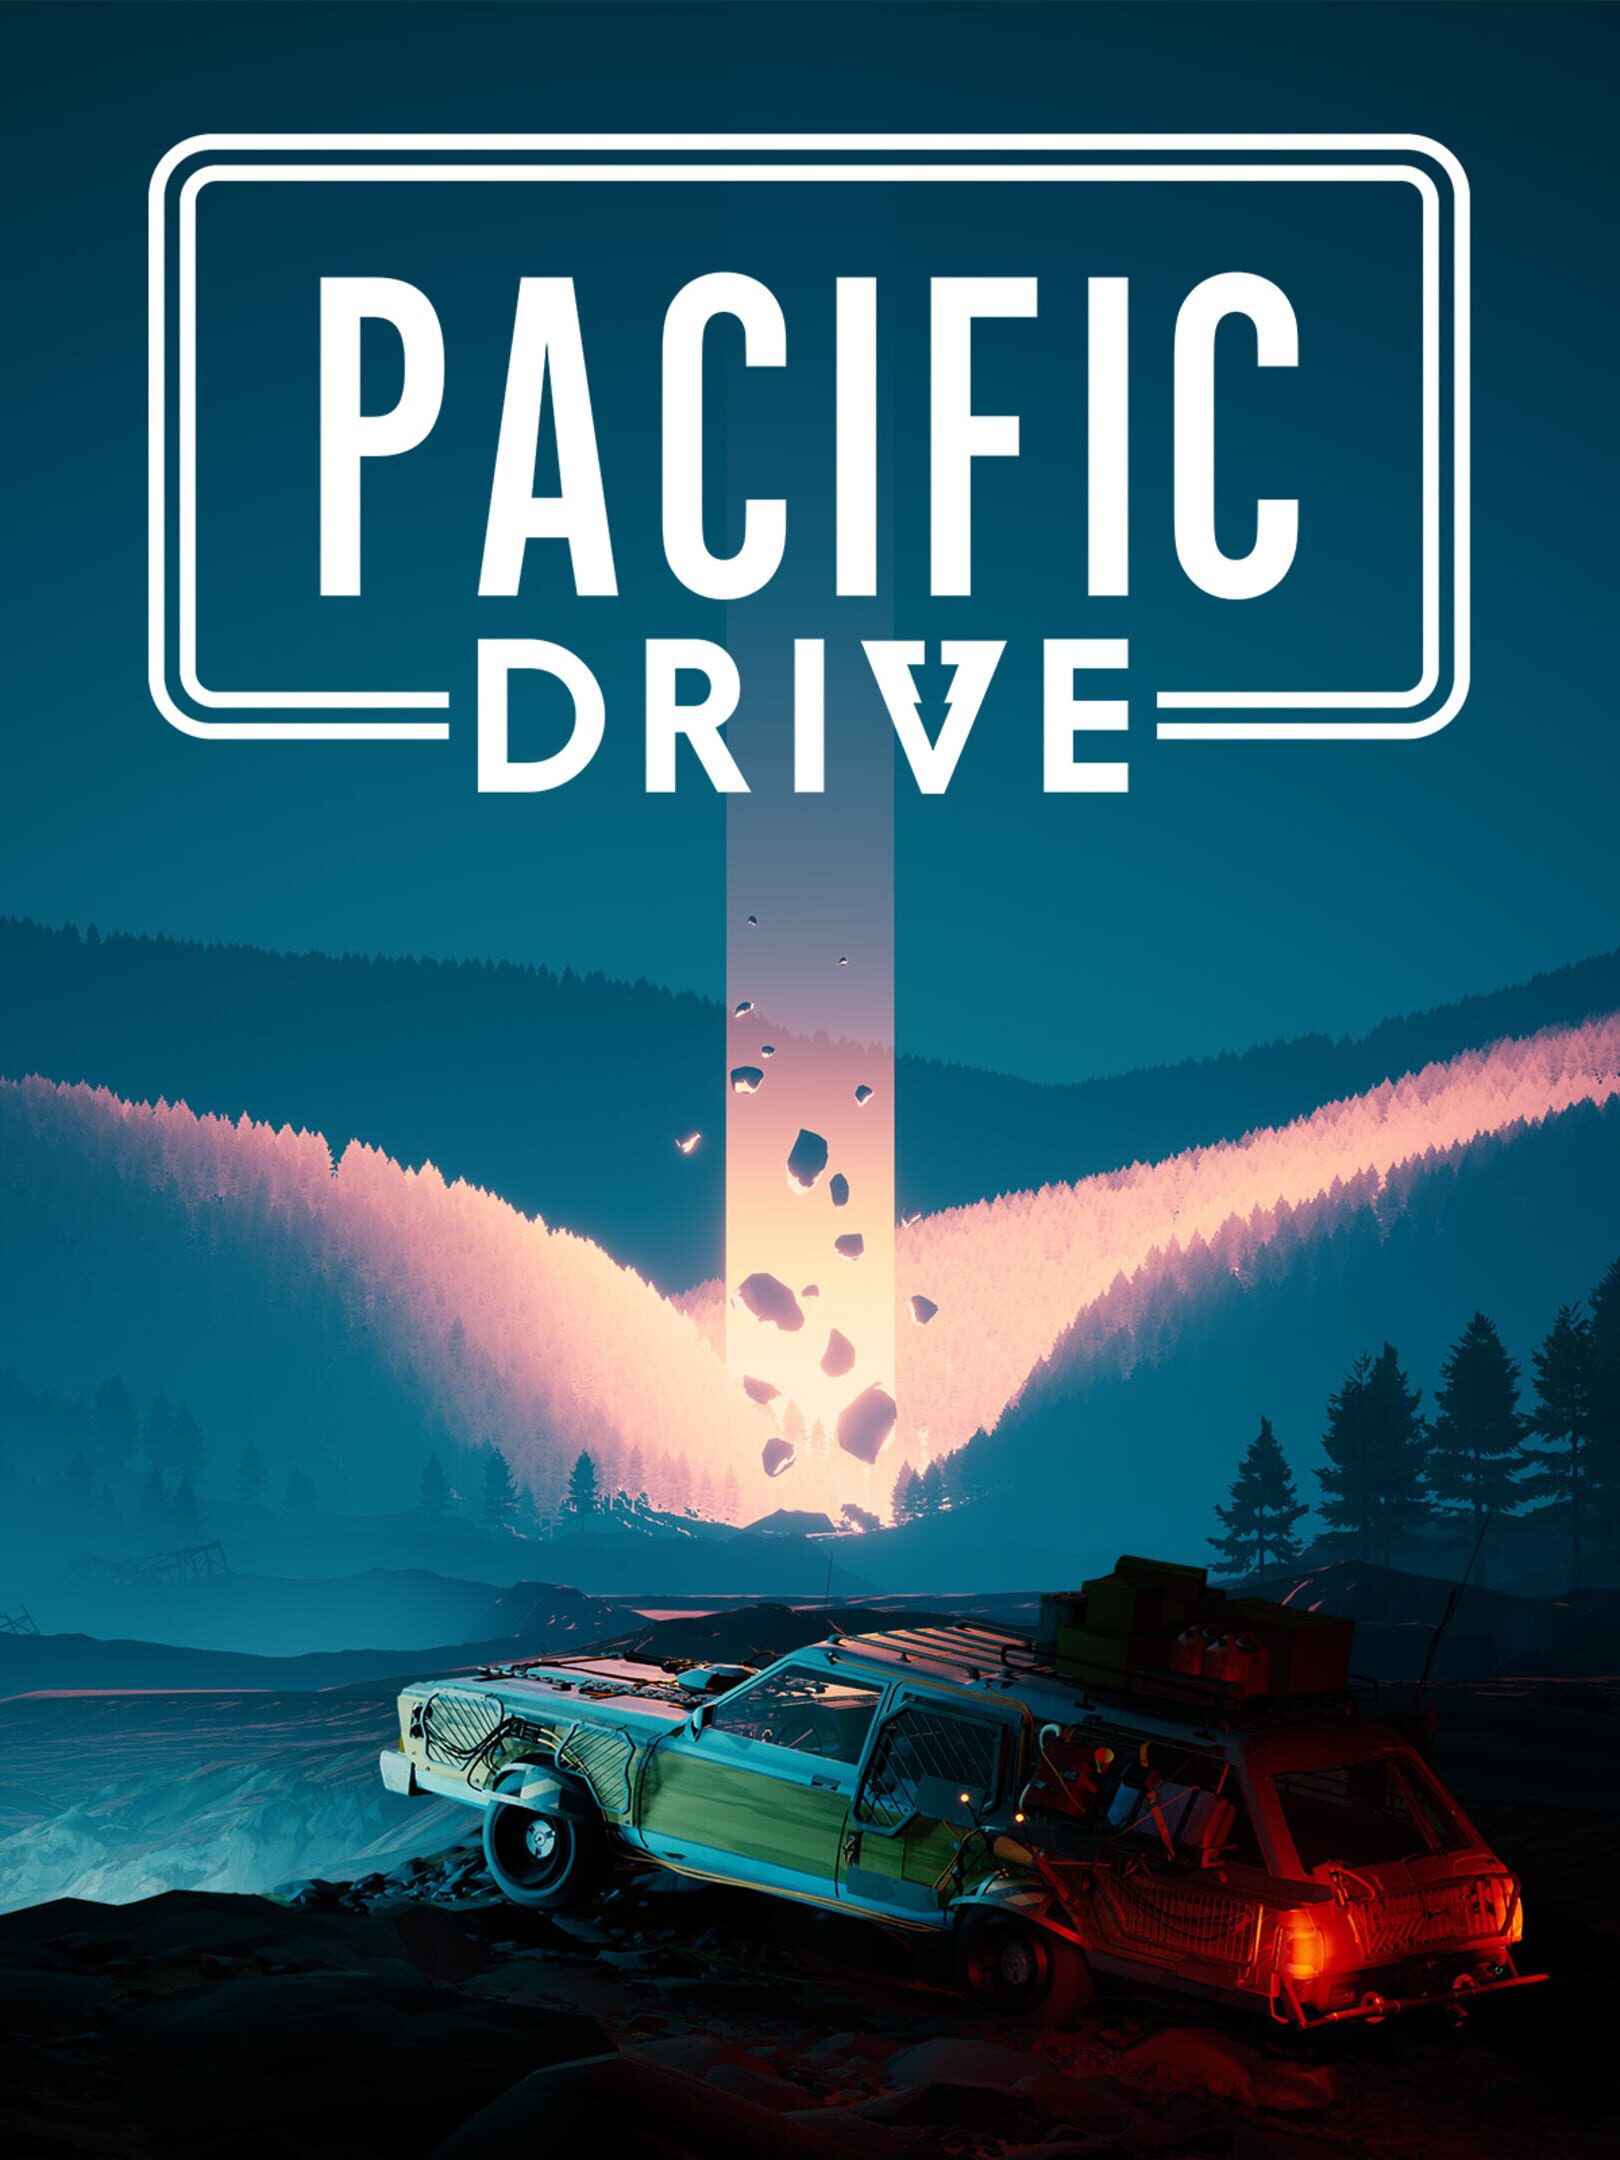 DICIFIC Drive игра. Пасифик драйв обложка. Пацифик драйв игра. Pacific Drive Постер.